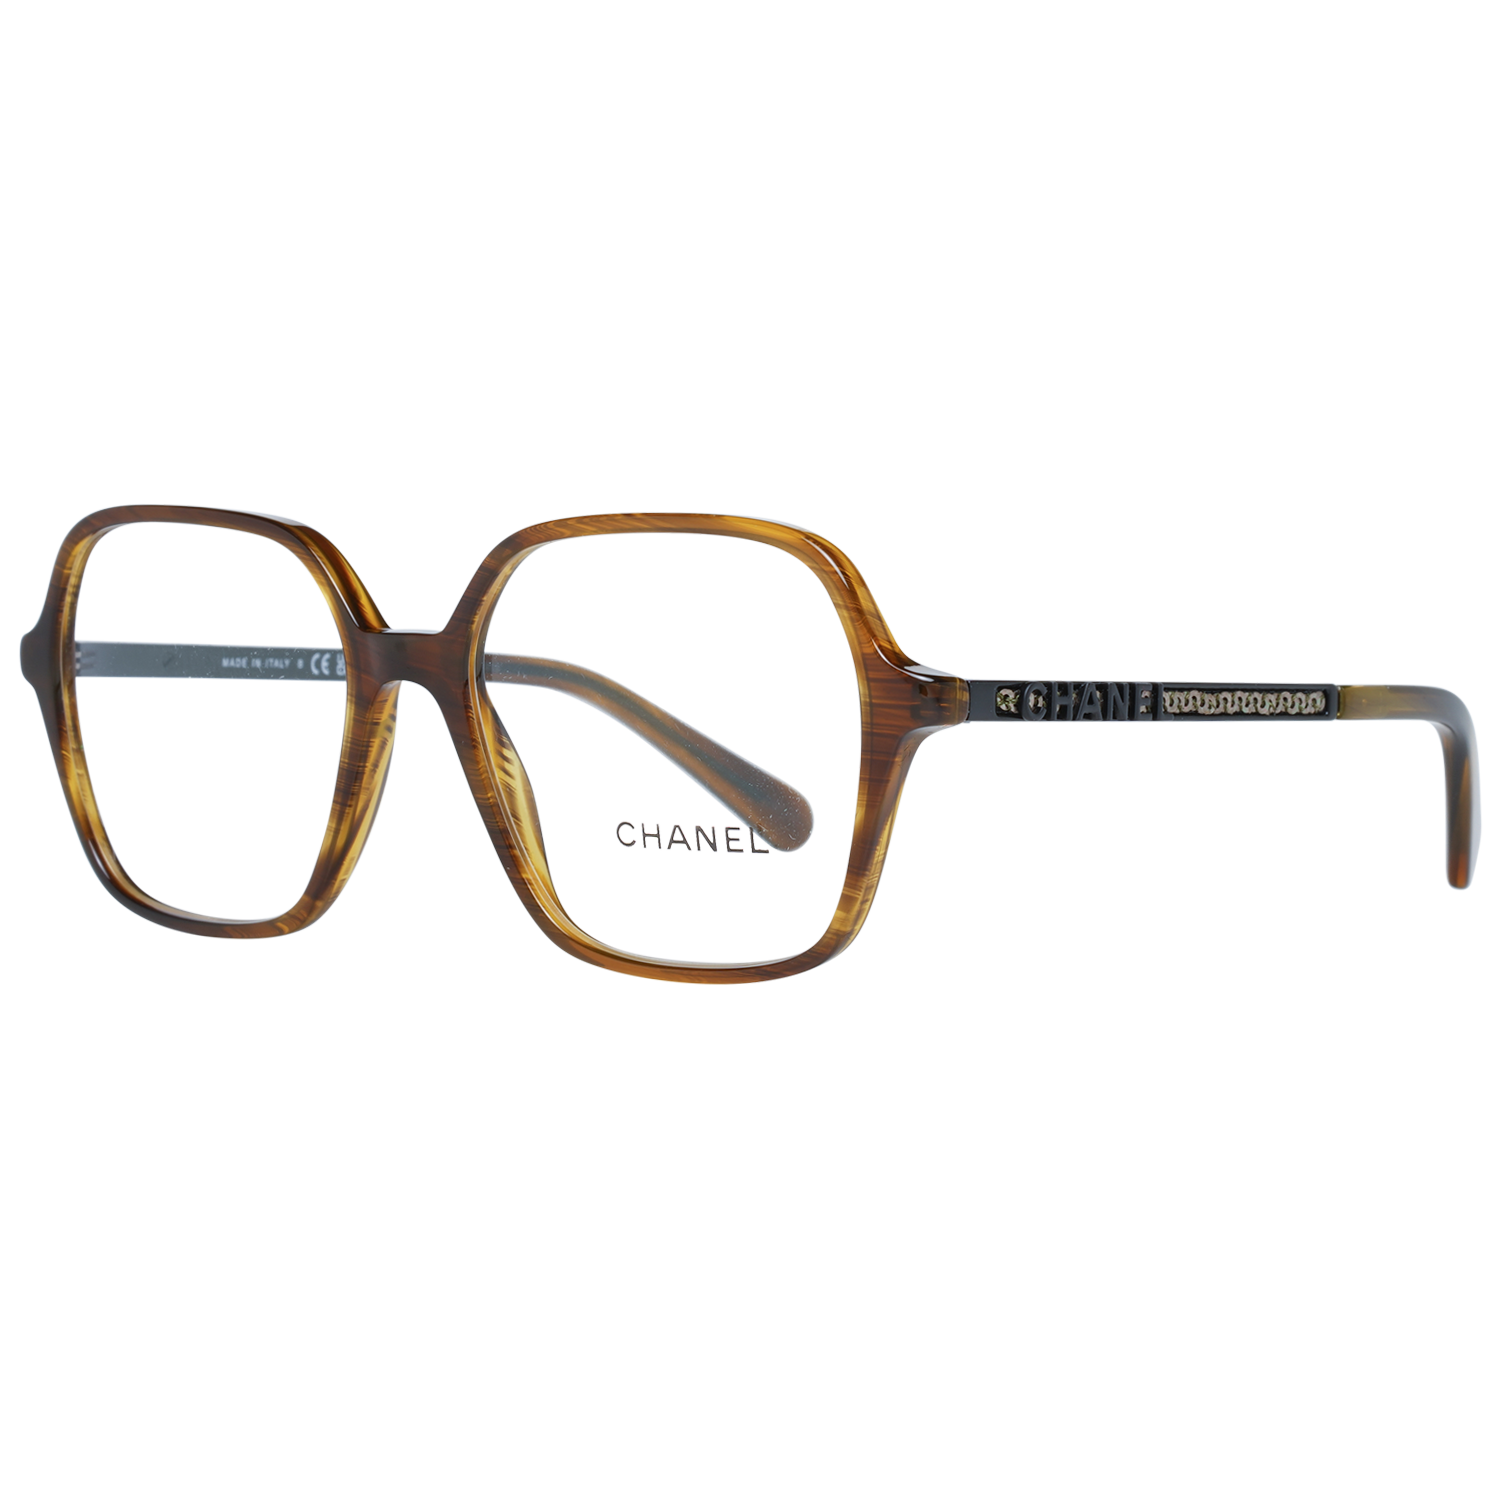 Chanel 3422 1699 Glasses - US